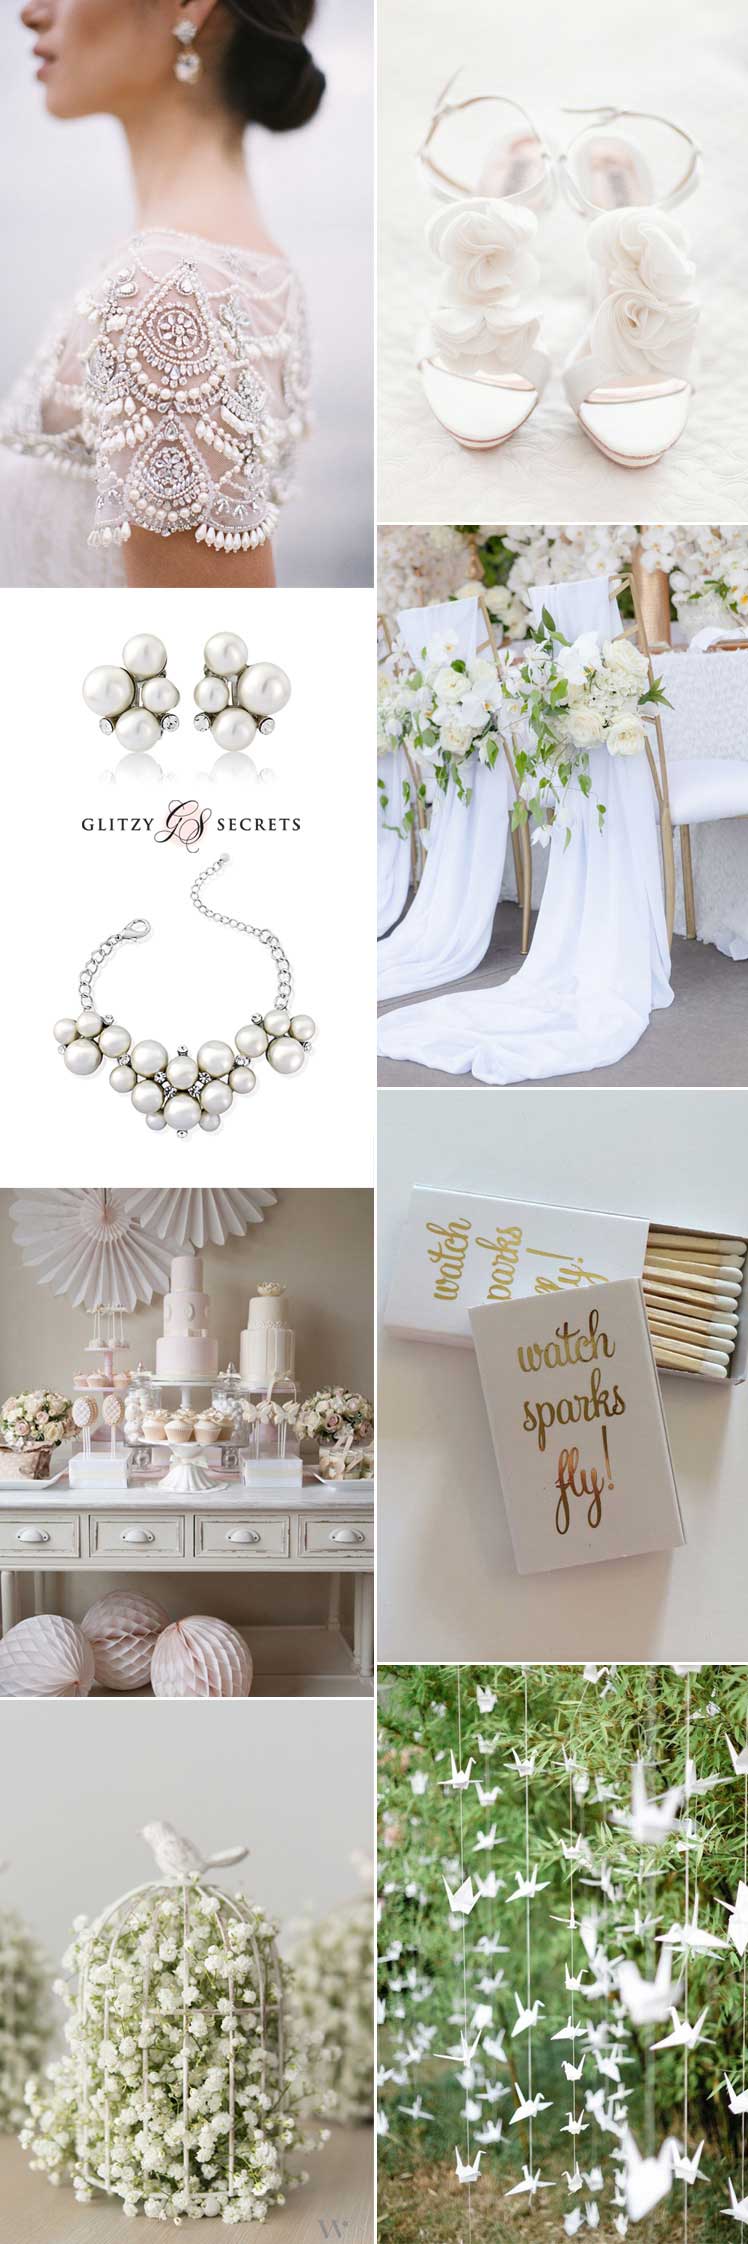 Classy white wedding ideas